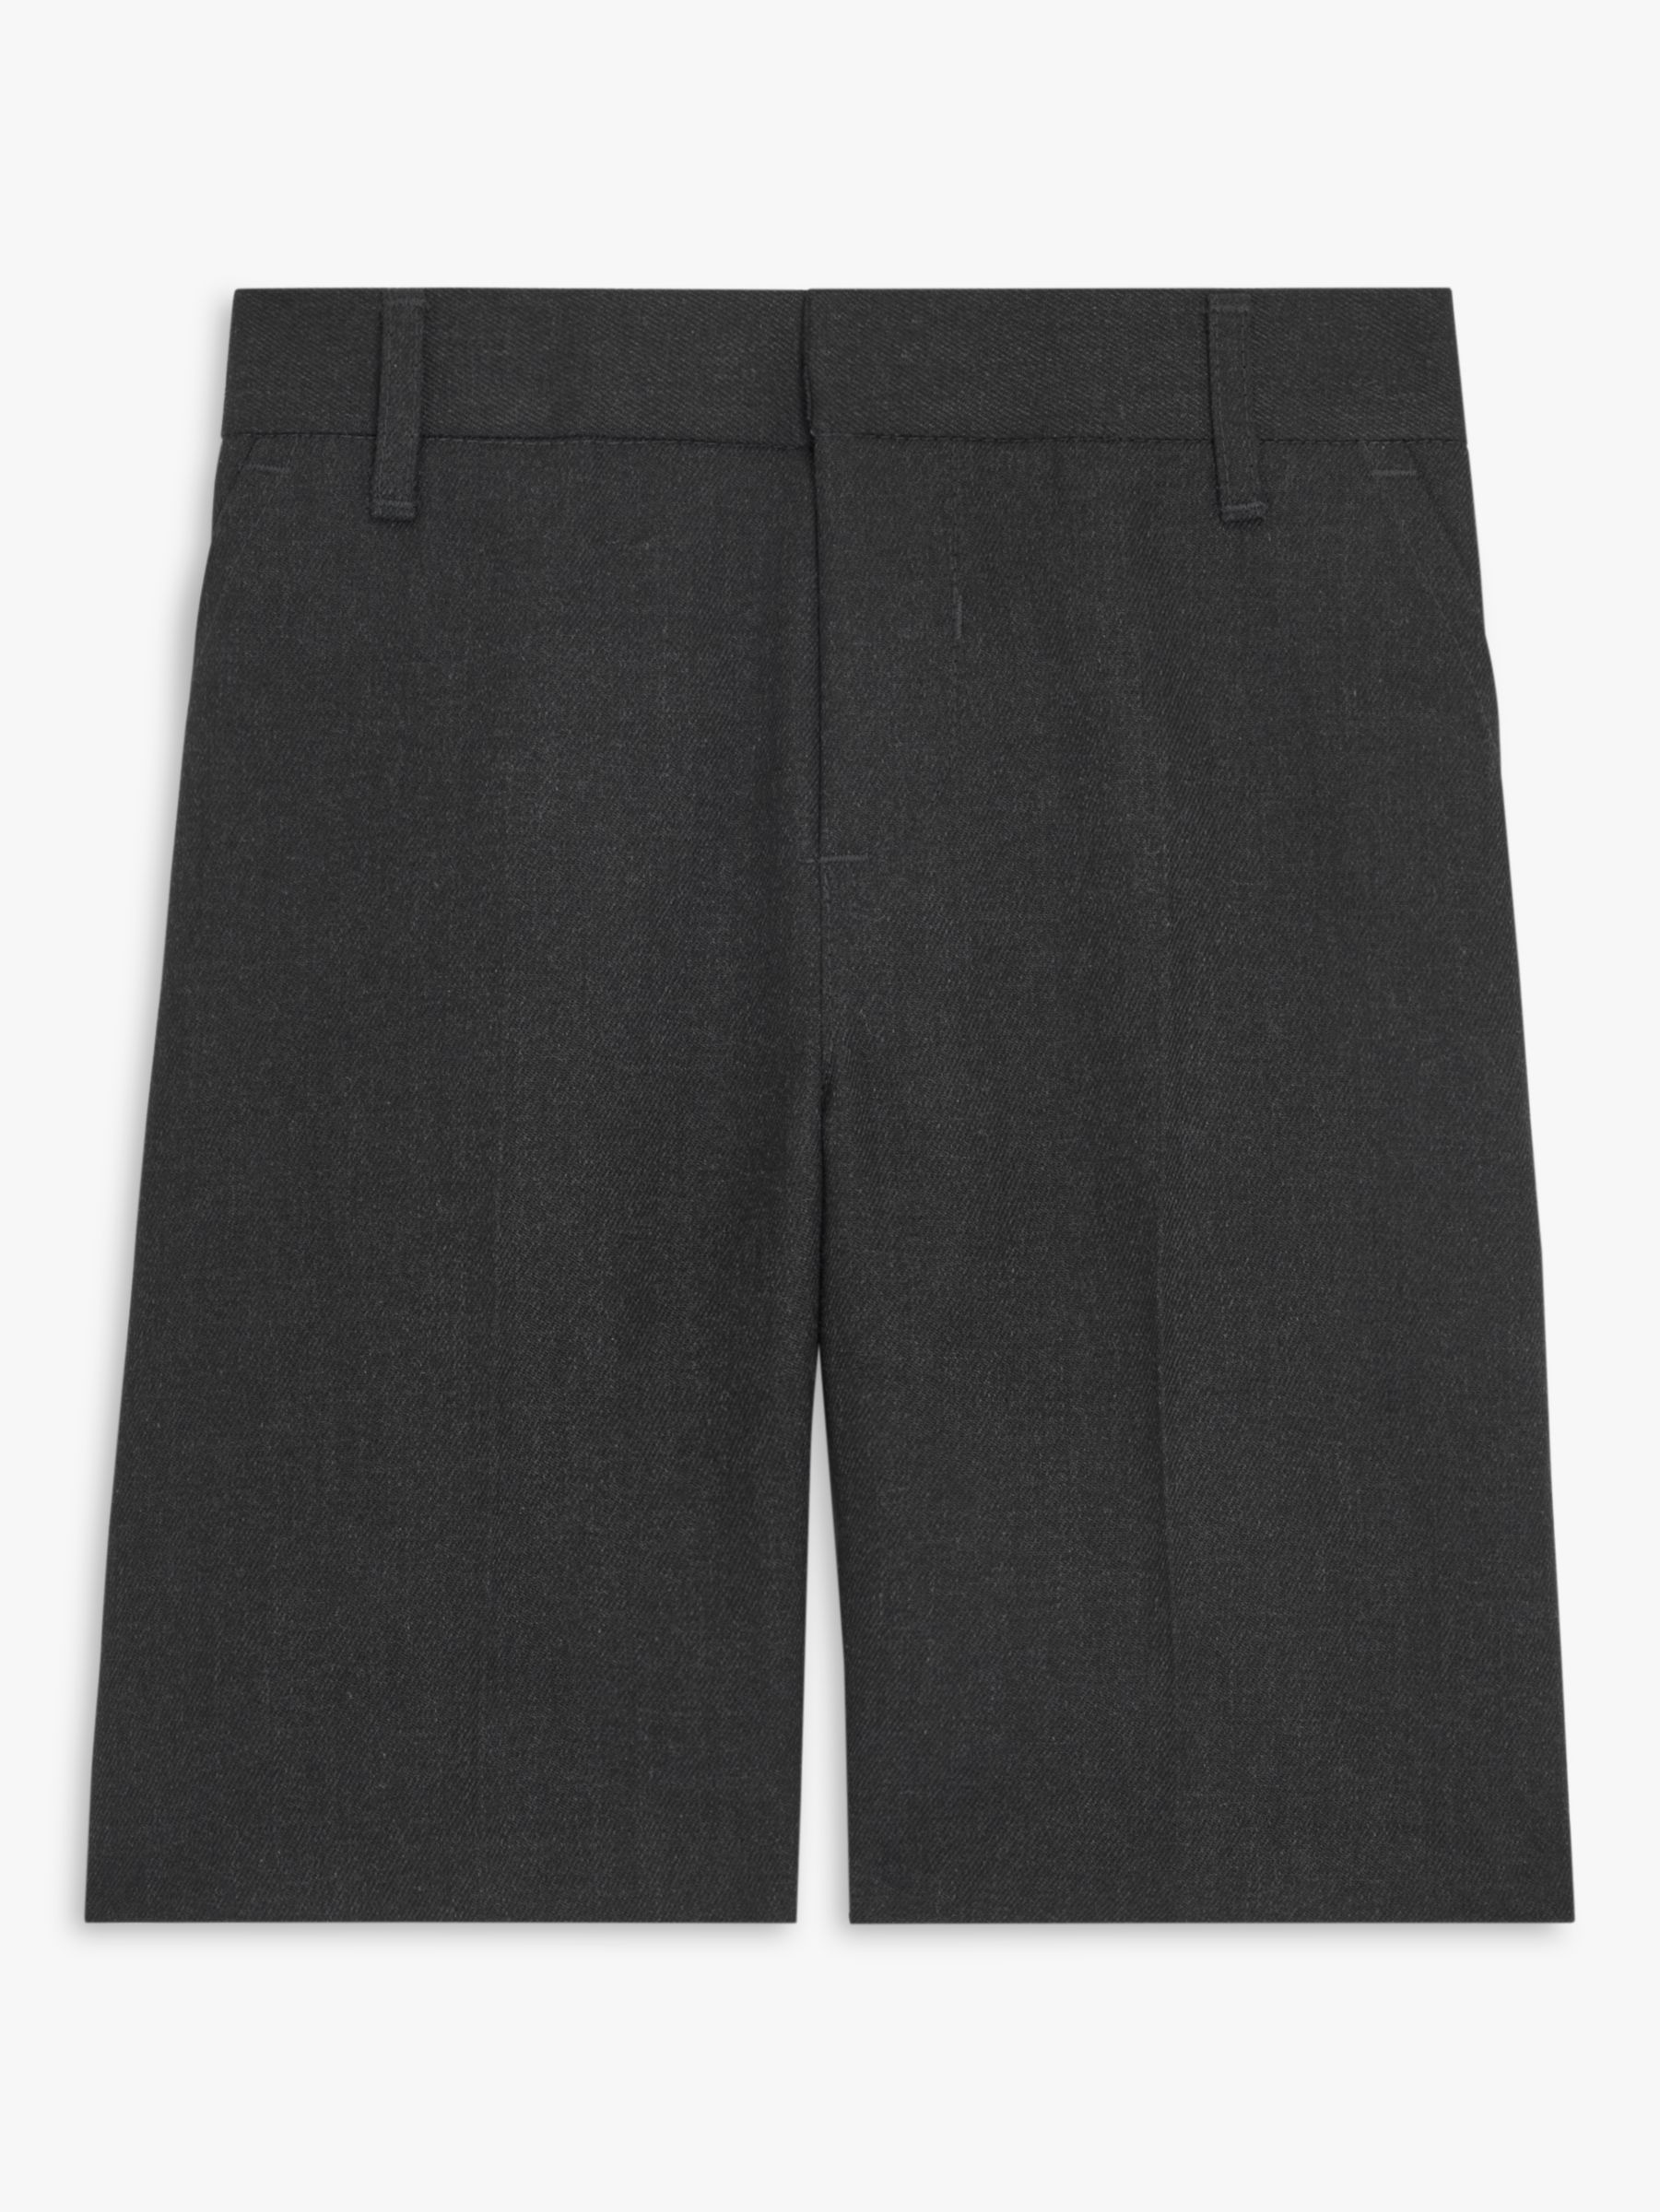 John Lewis Kids' Adjustable Waist Stain Resistant School Shorts, Grey Charcoal, 10 years